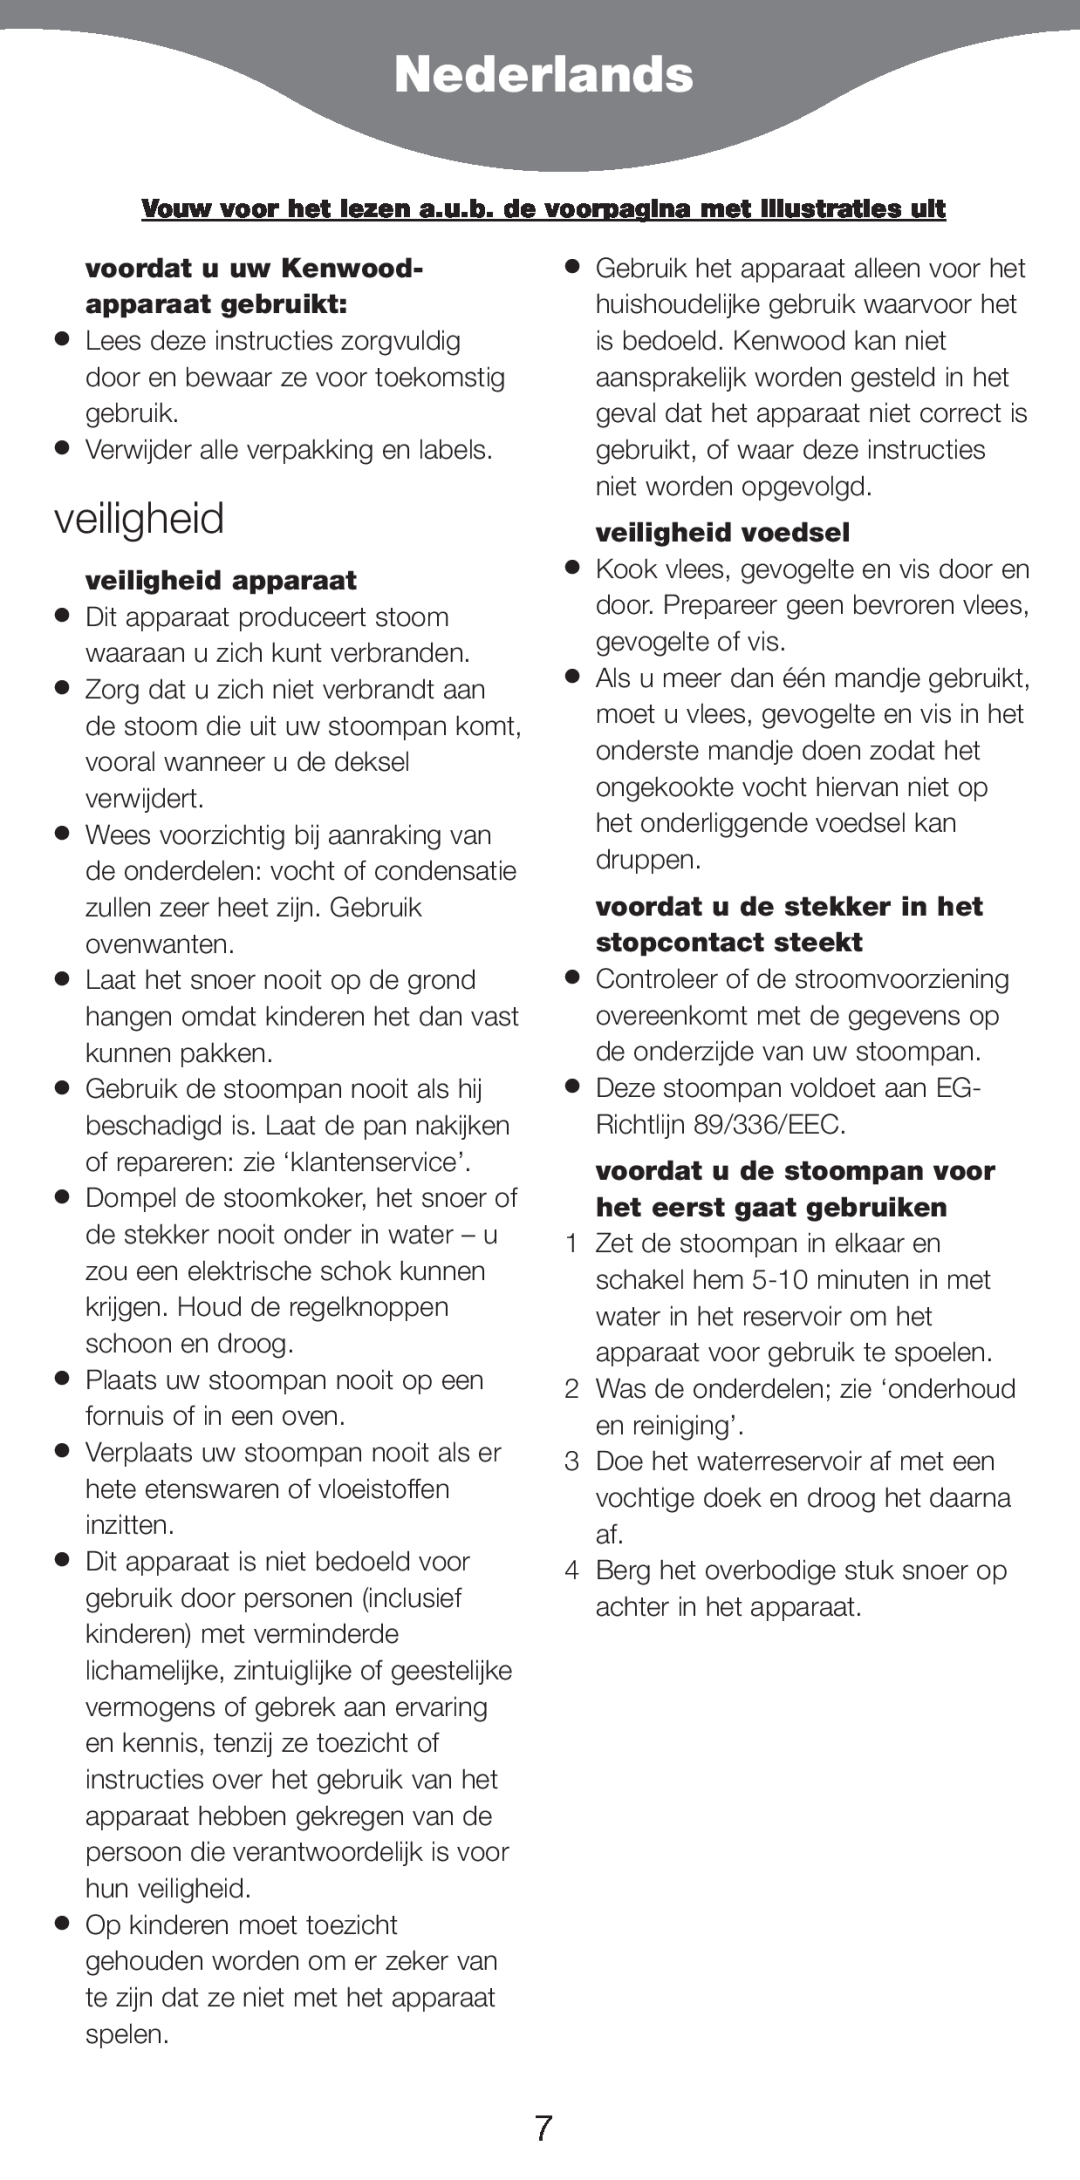 Kenwood FS370 manual Nederlands, voordat u uw Kenwood- apparaat gebruikt, veiligheid apparaat, veiligheid voedsel 